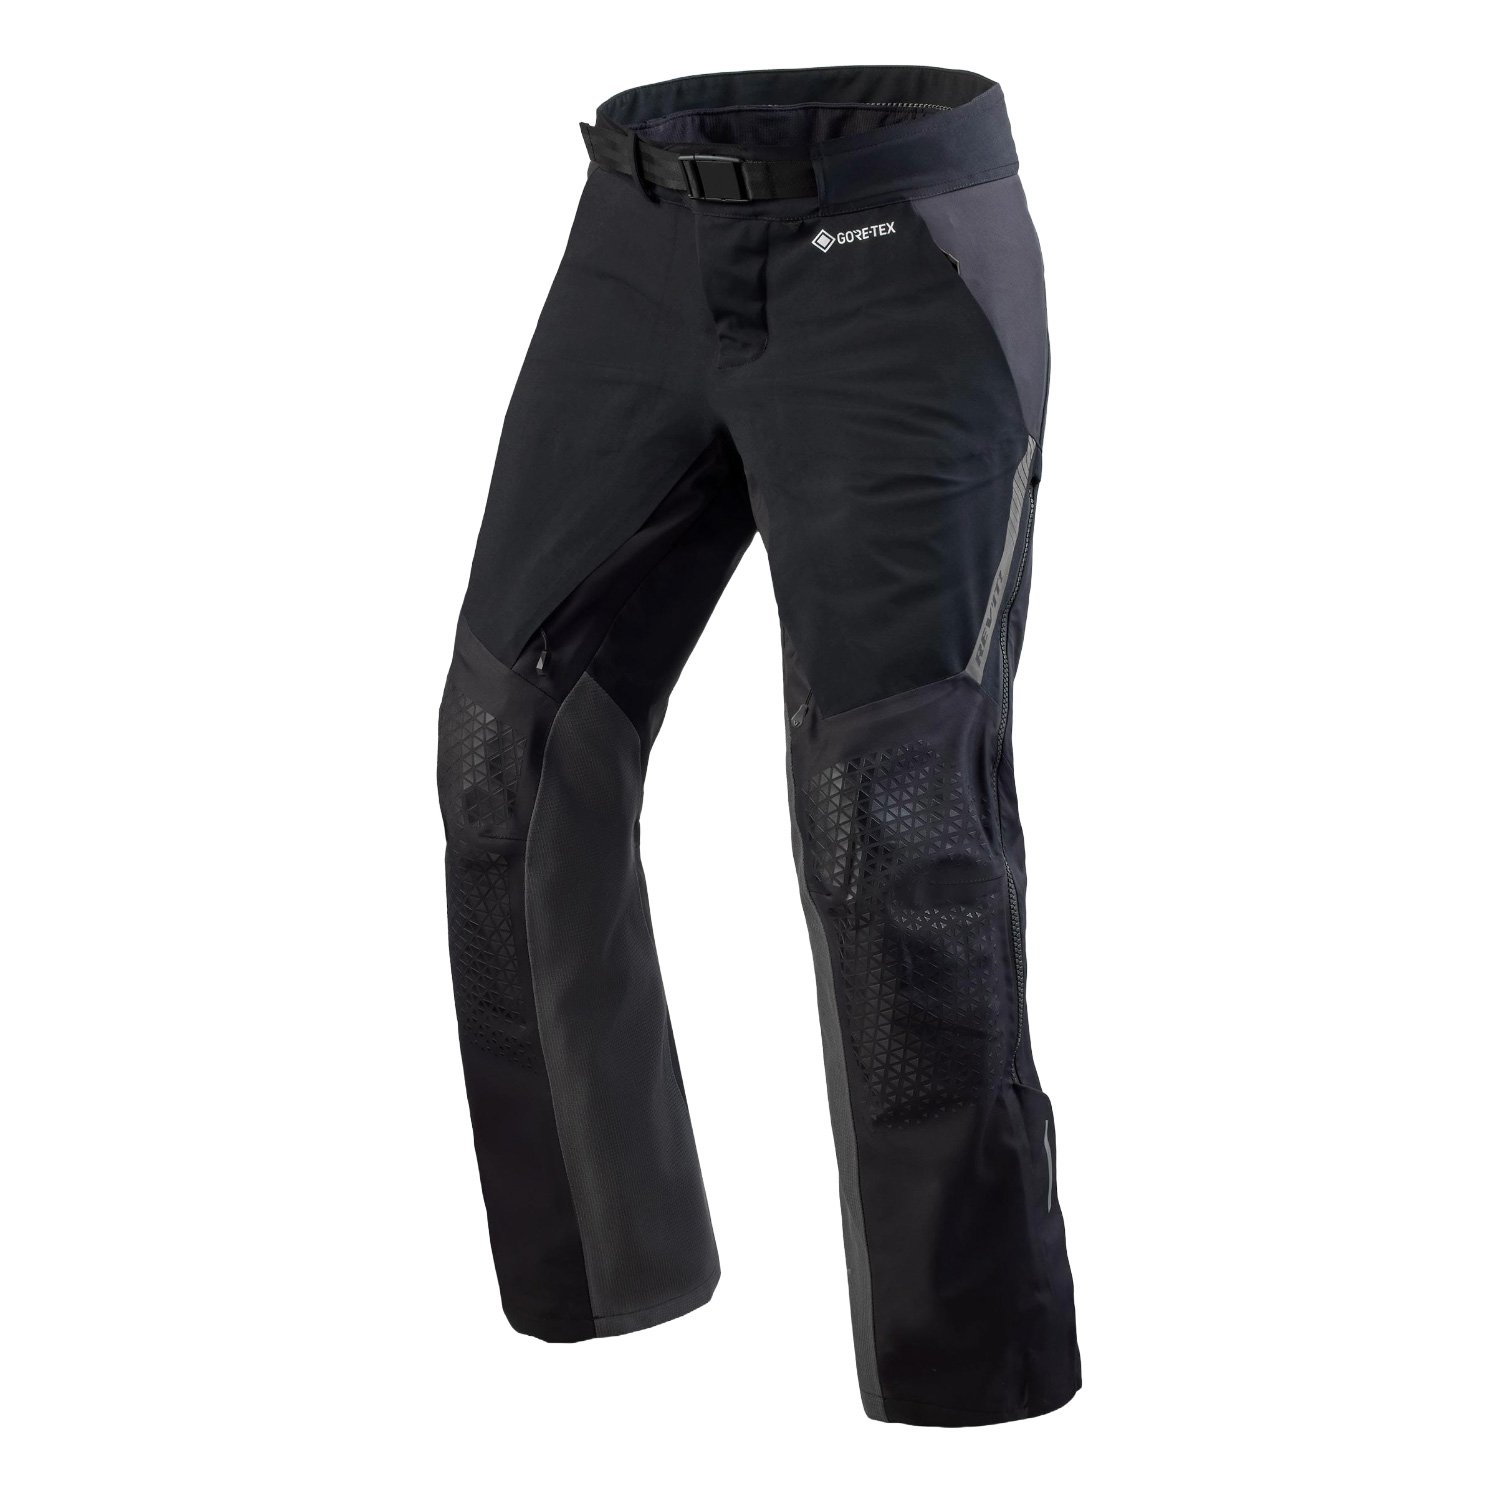 Image of REV'IT! Stratum GTX Black Grey Short Motorcycle Pants Size M EN